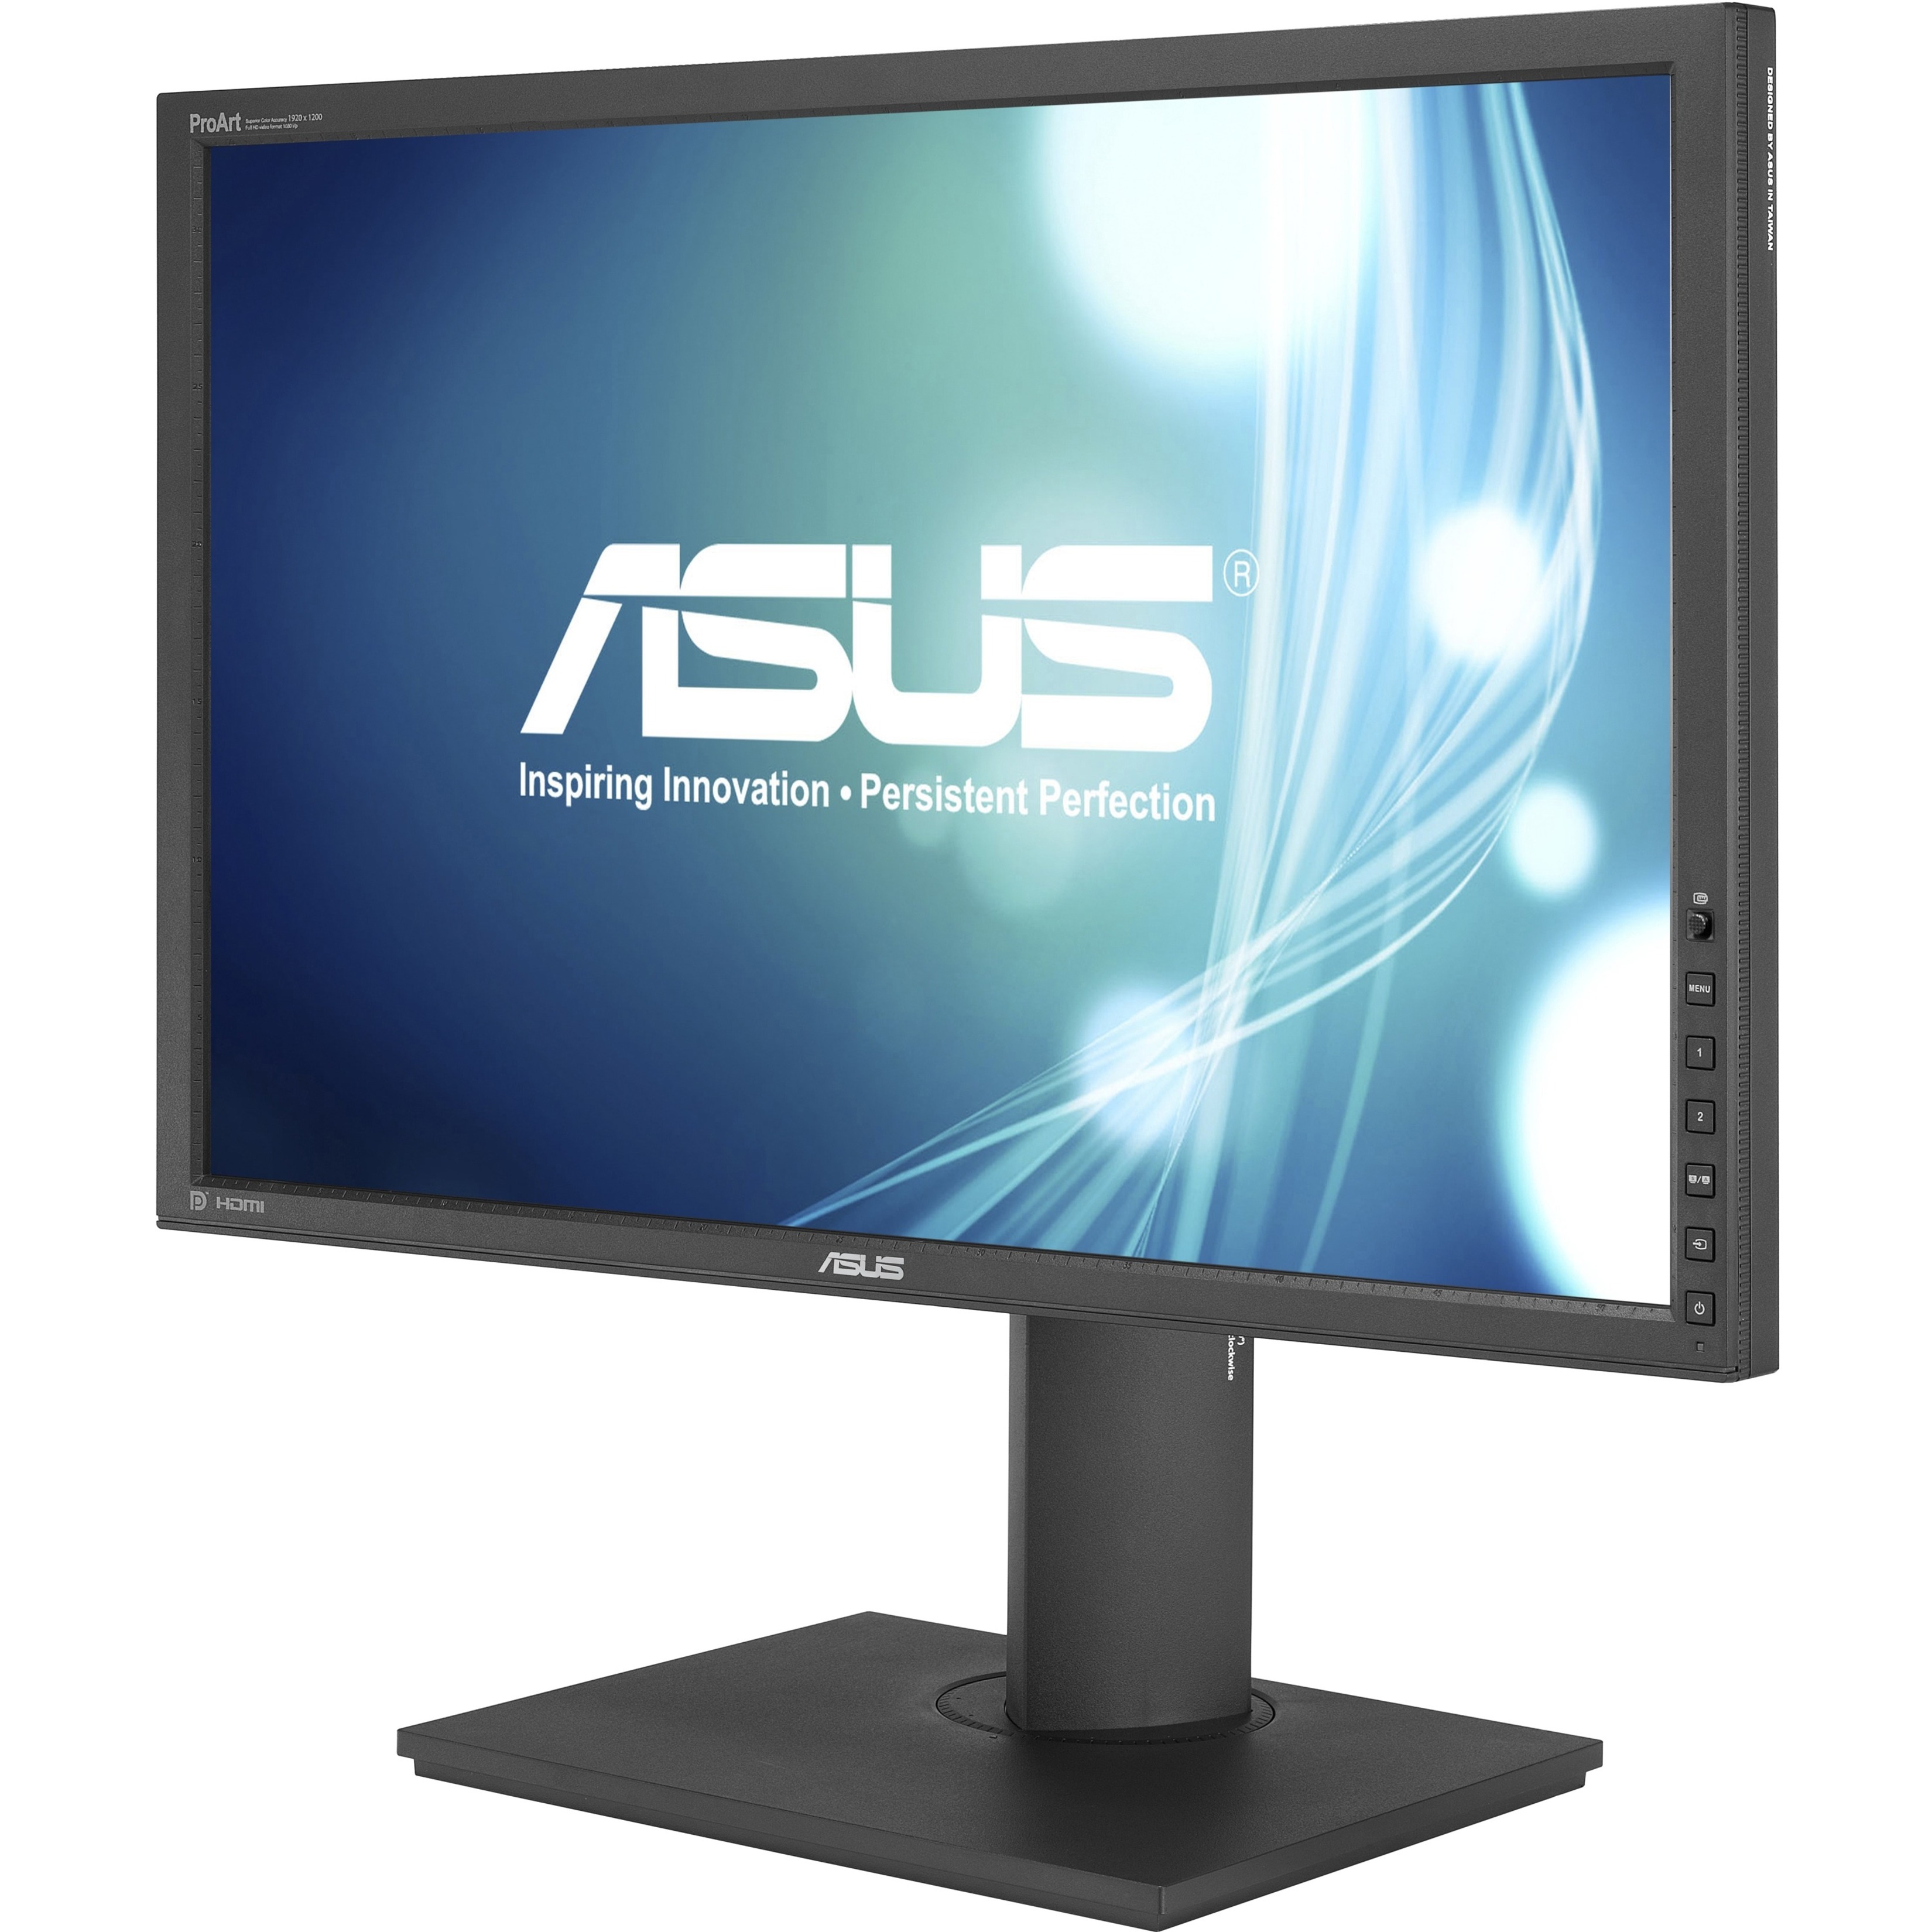 Asus ProArt PA248Q 24" Class WUXGA LCD Monitor, 16:10, Black - image 2 of 7